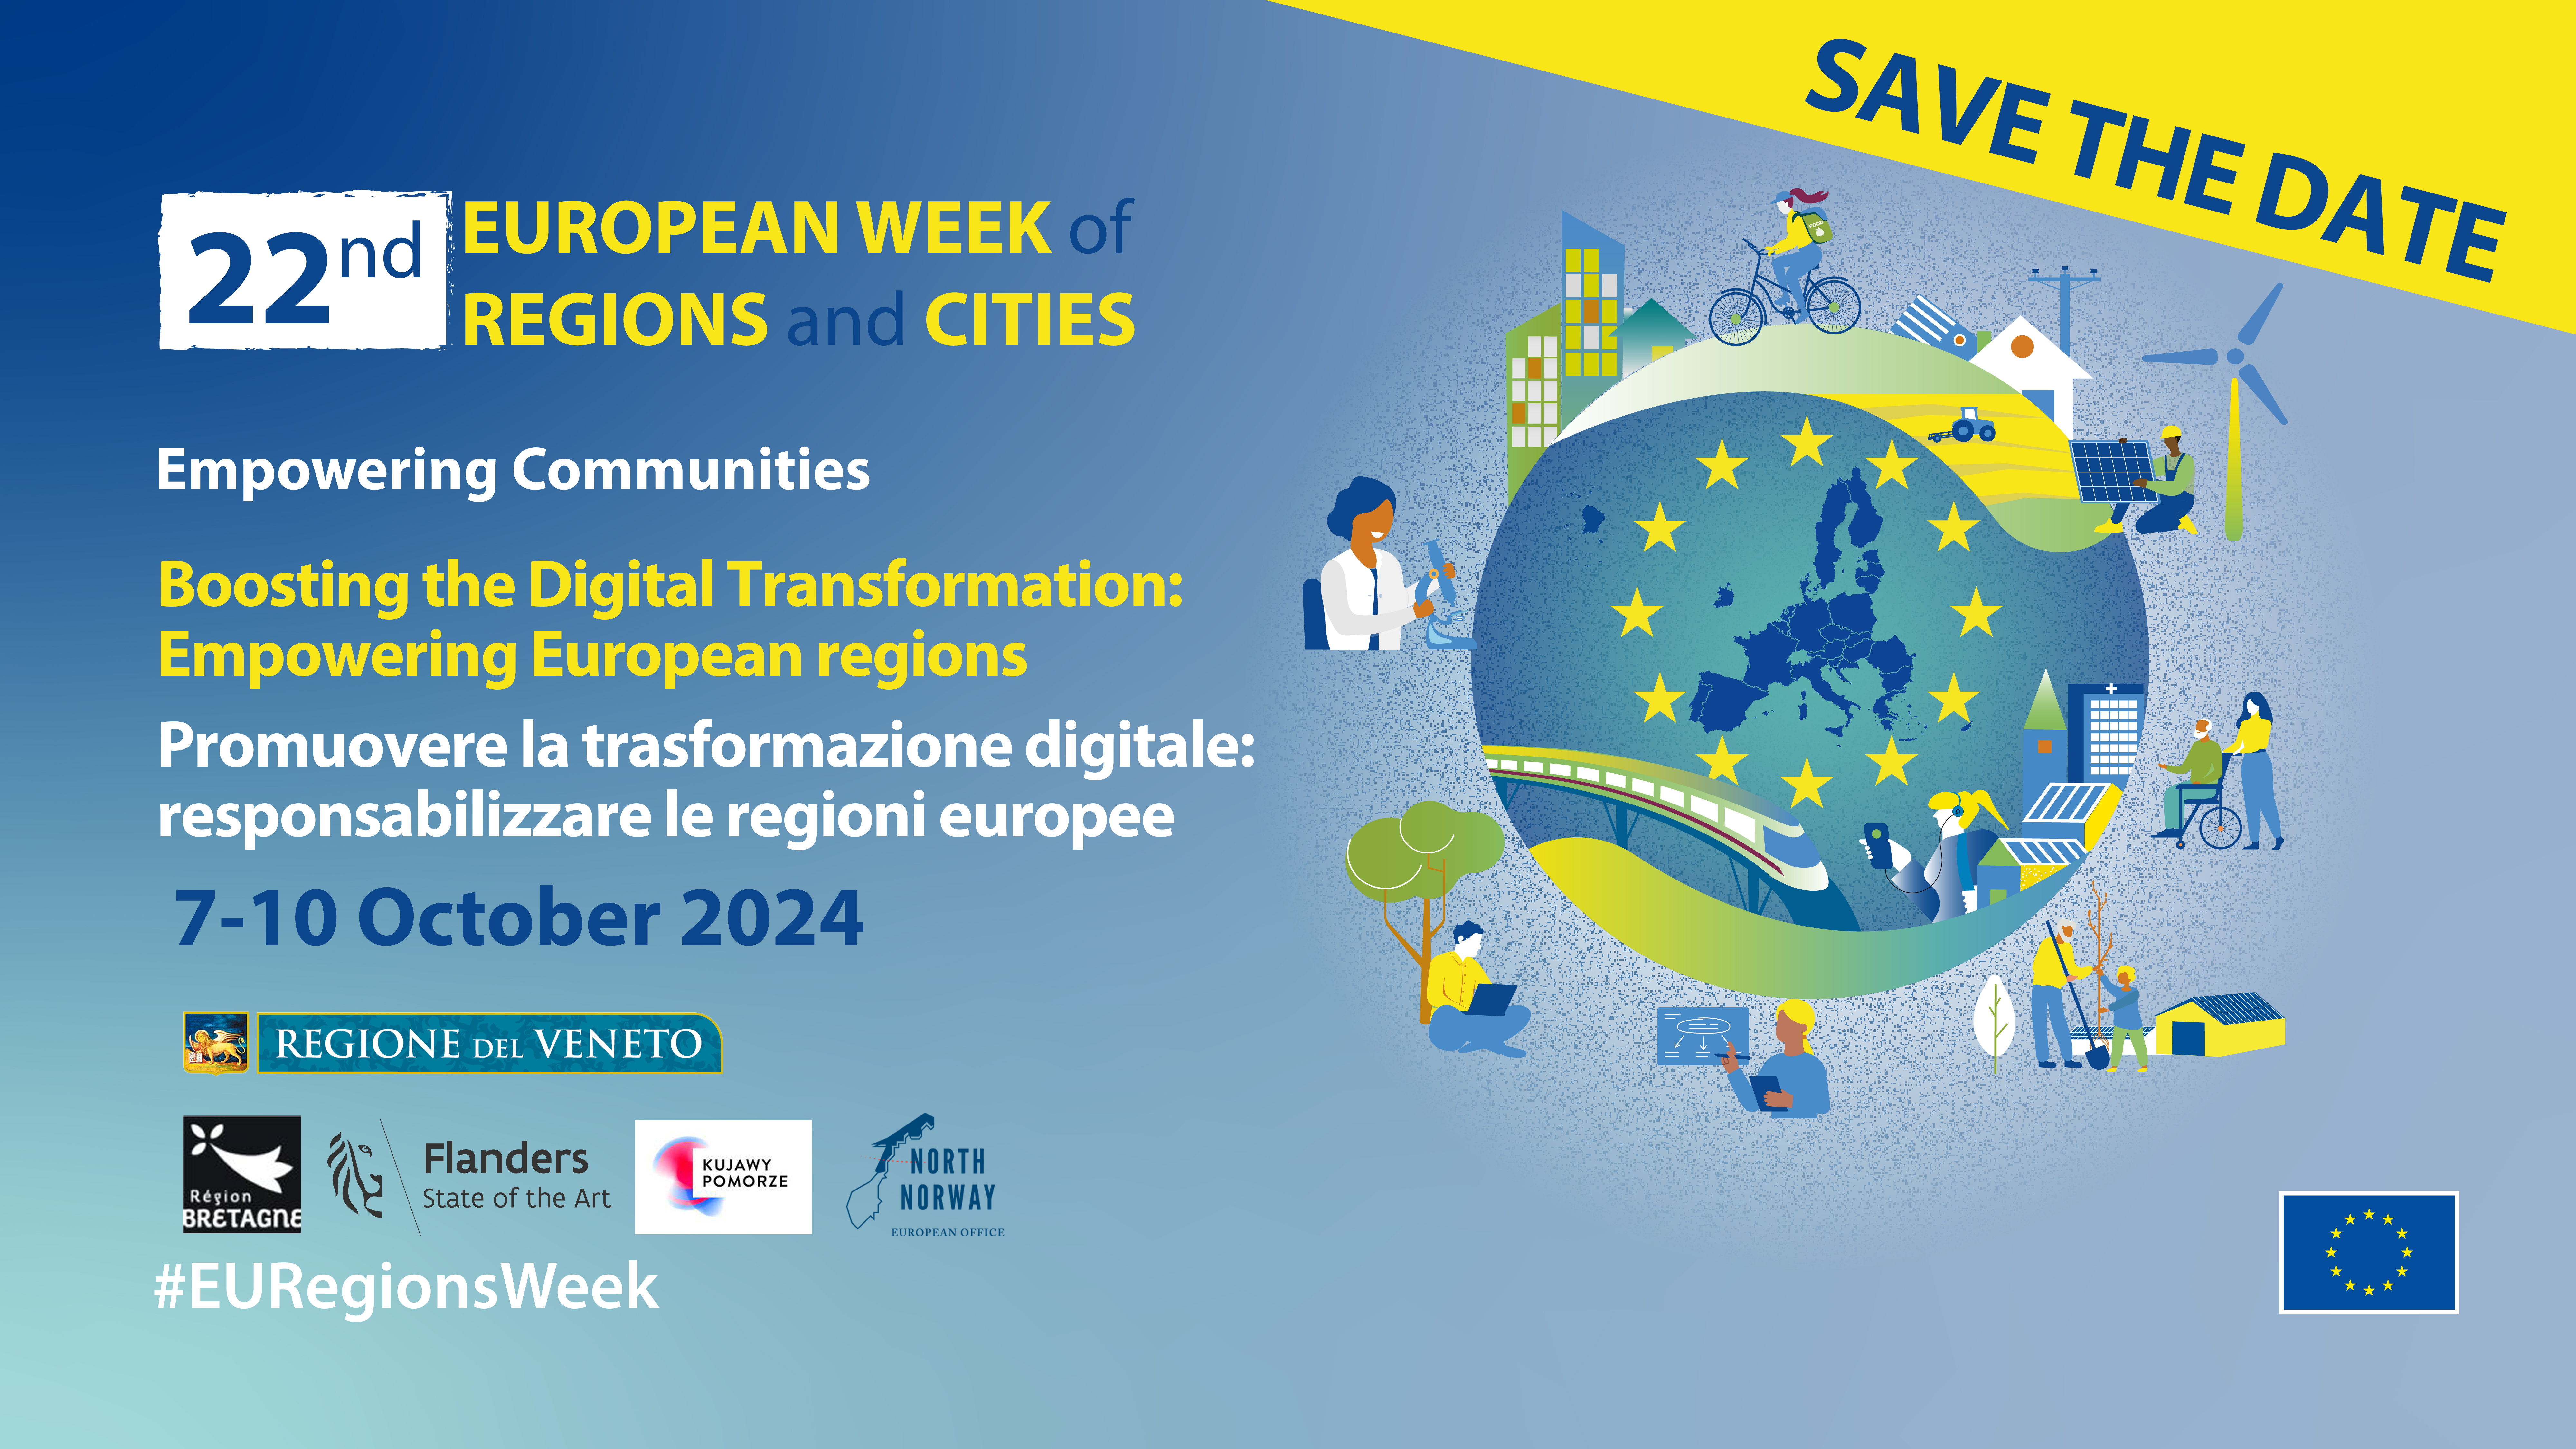 Boosting the Digital Transformation: Empowering European regions